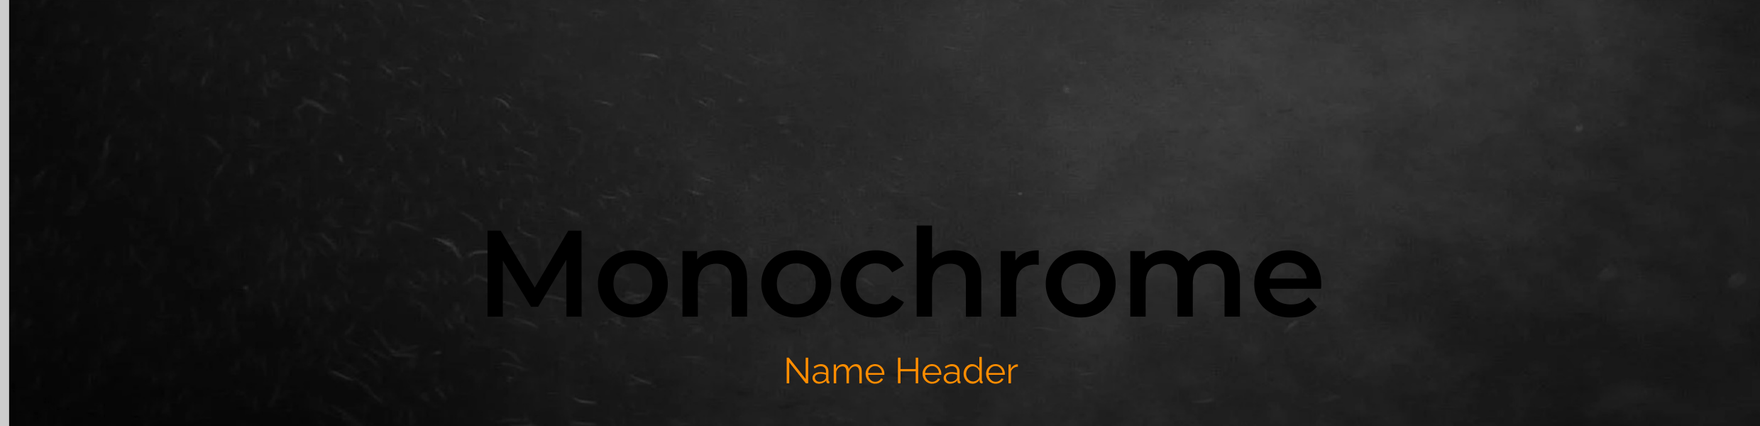 Monochrome Name Header